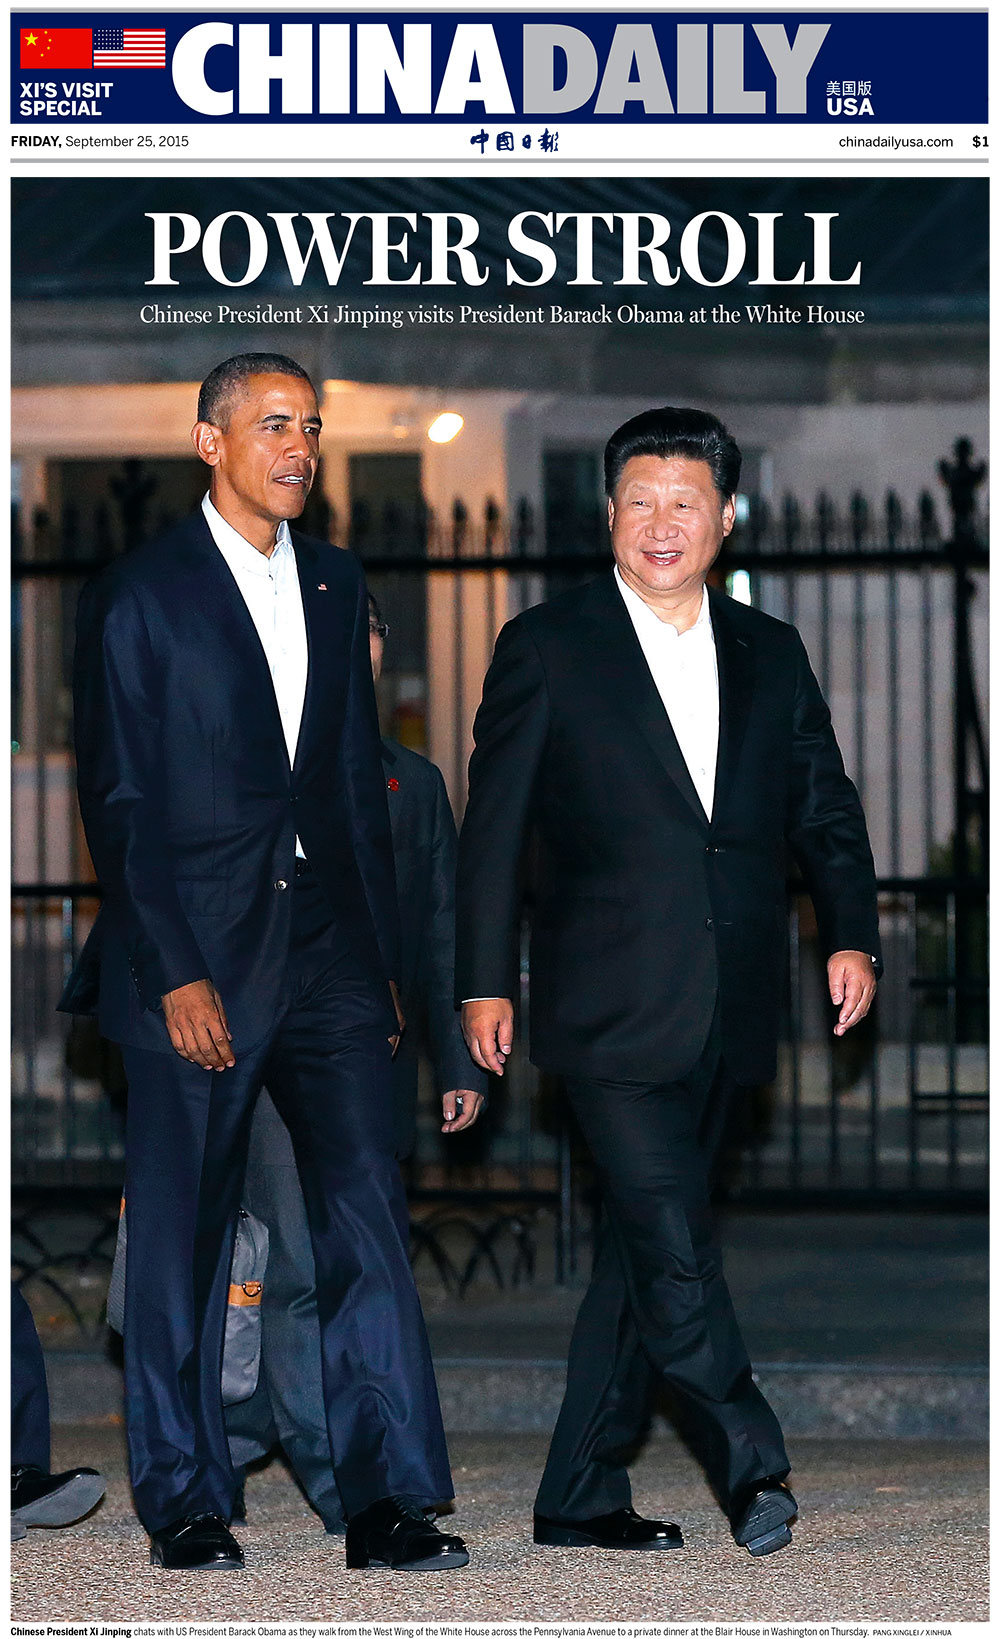 ‘China Daily,’ U.S. edition, September 25, 2015.